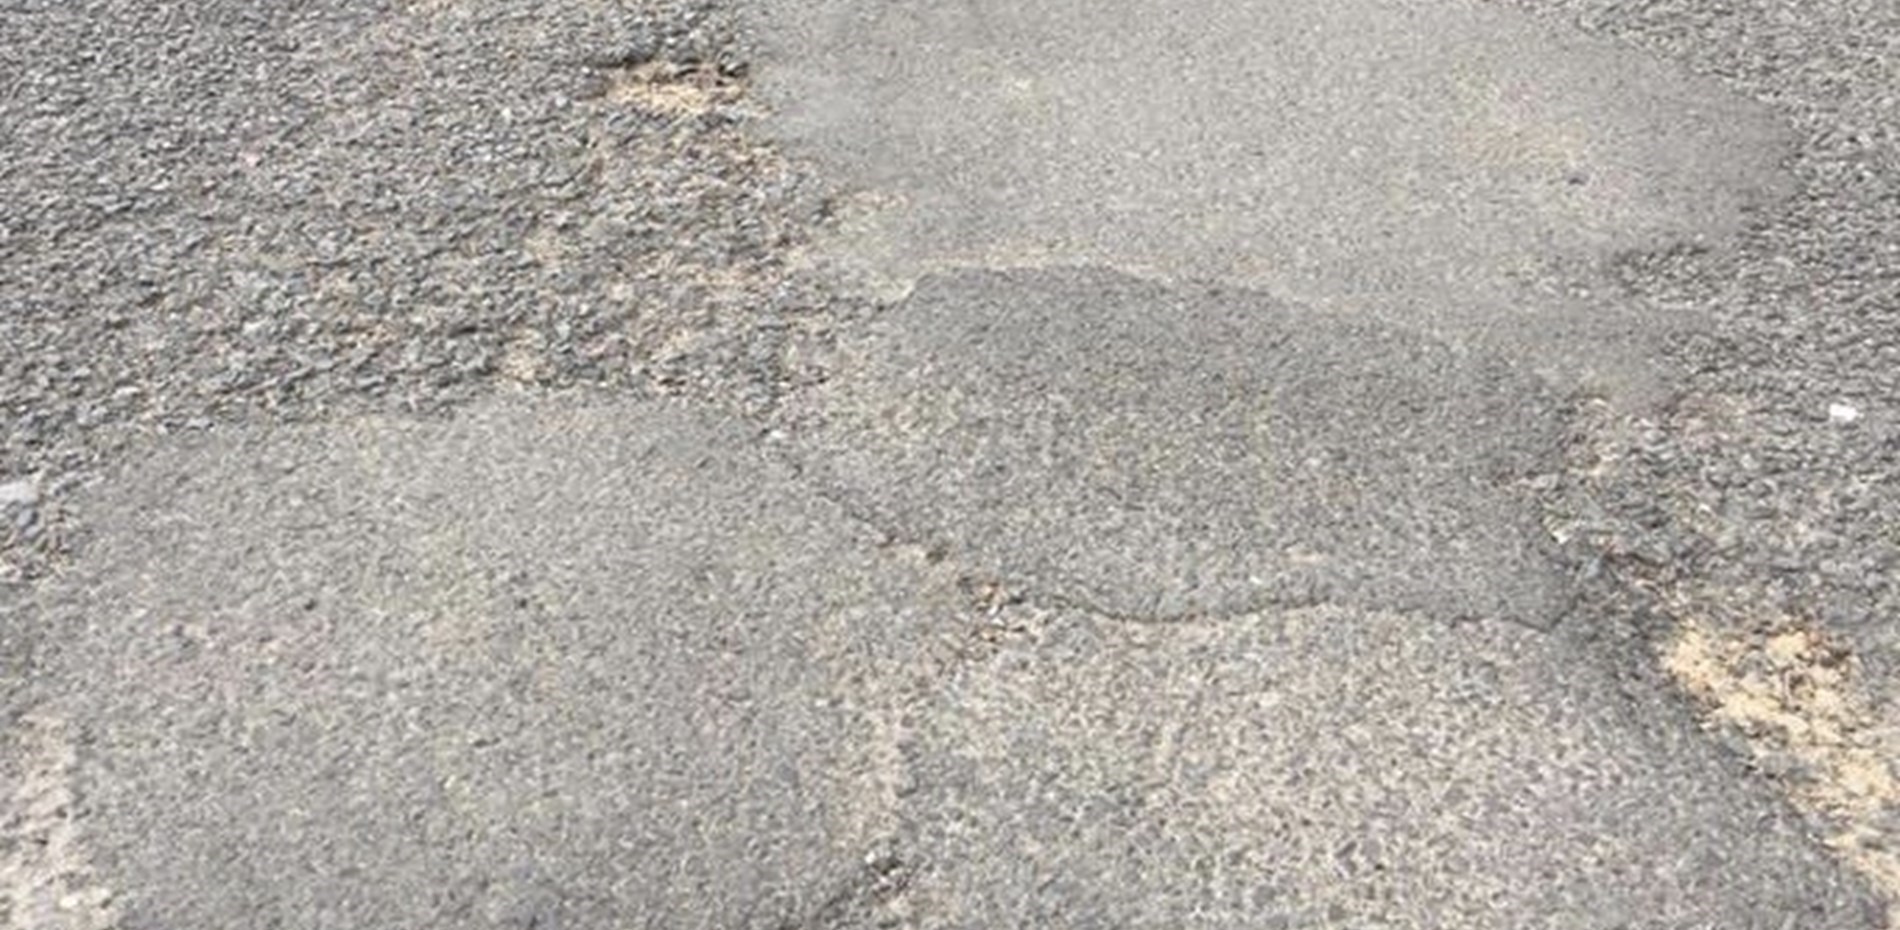 Media release: Funding to fix Kiama road black spots Main Image